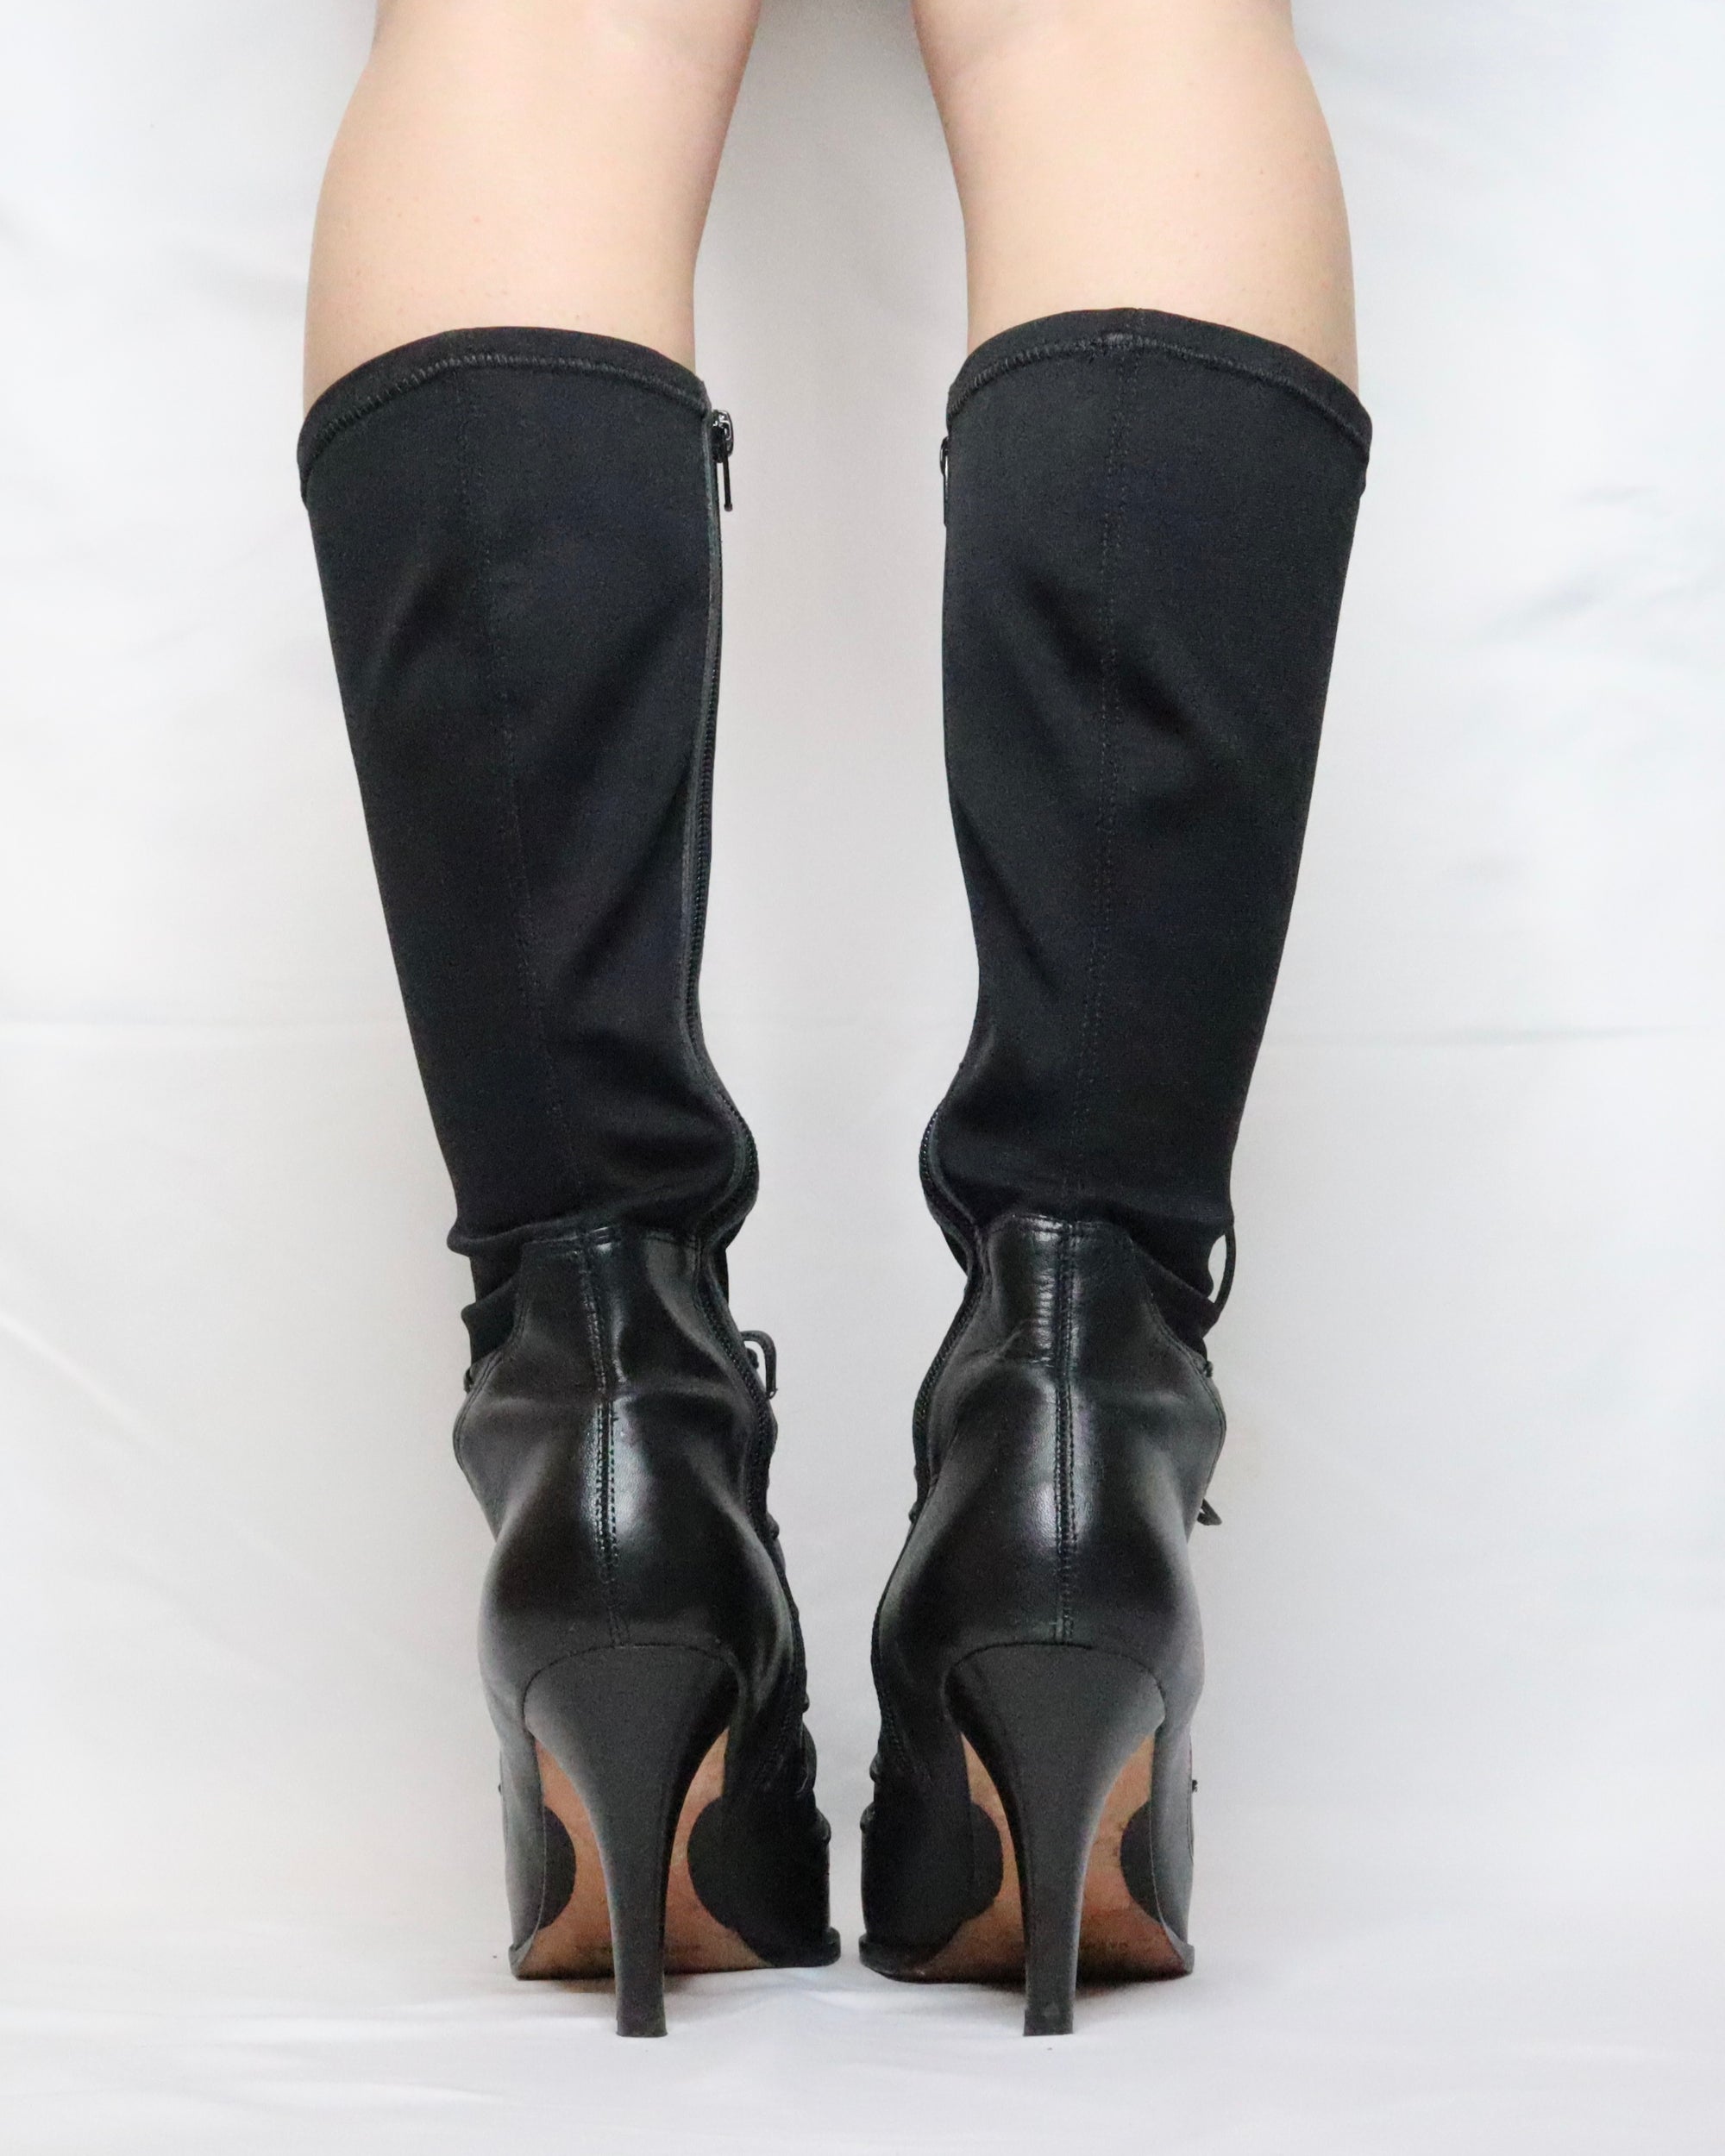 Black Stiletto Boots (7.5-8 US/39 EU) 